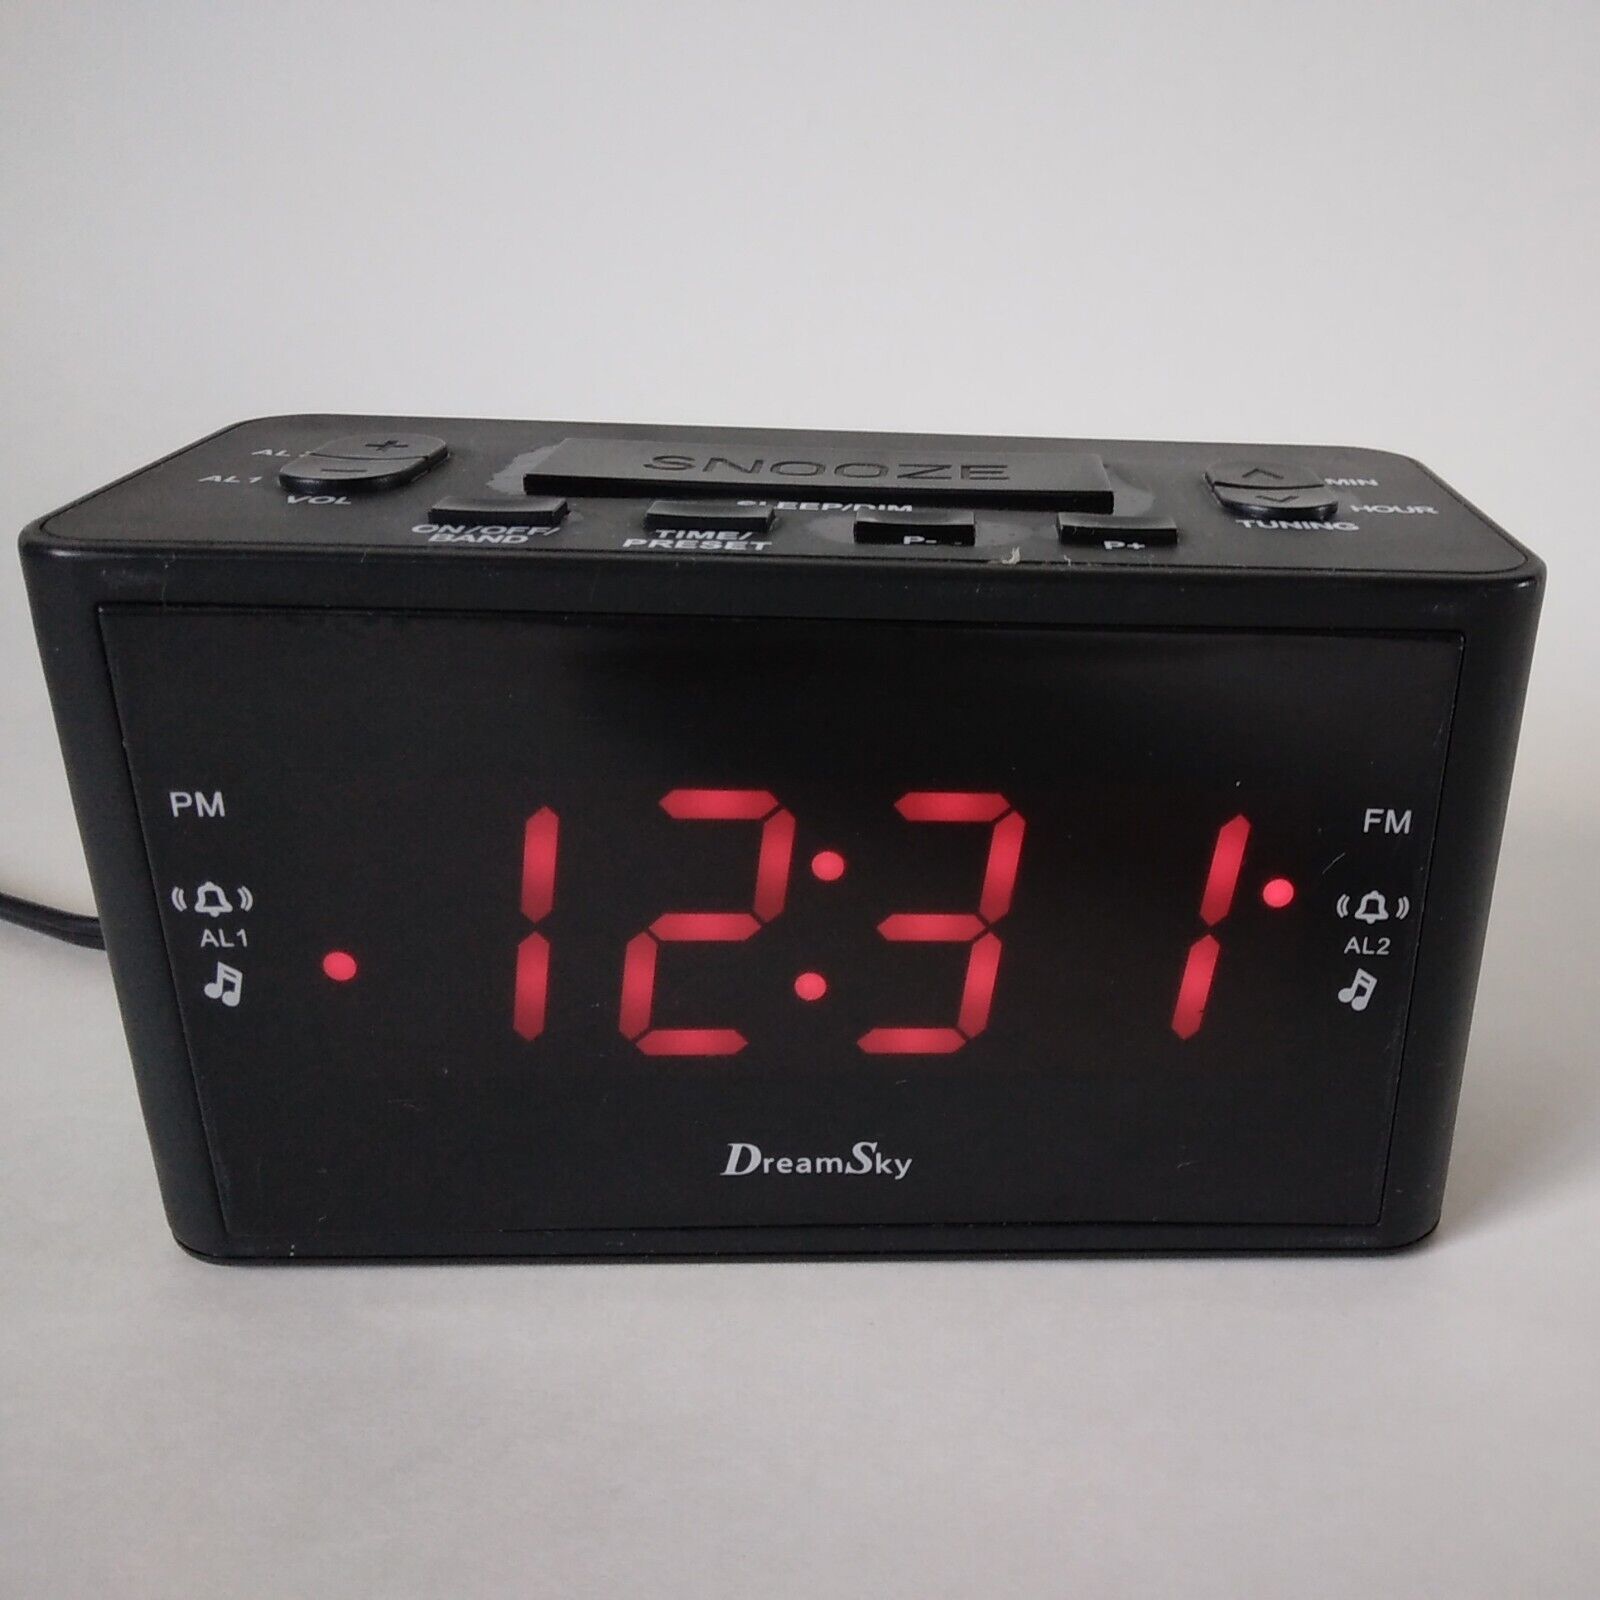 Dream Sky Model: DS-201 Radio Alarm Clock-Dual Alarm-AM/FM-Corded-Tested Works